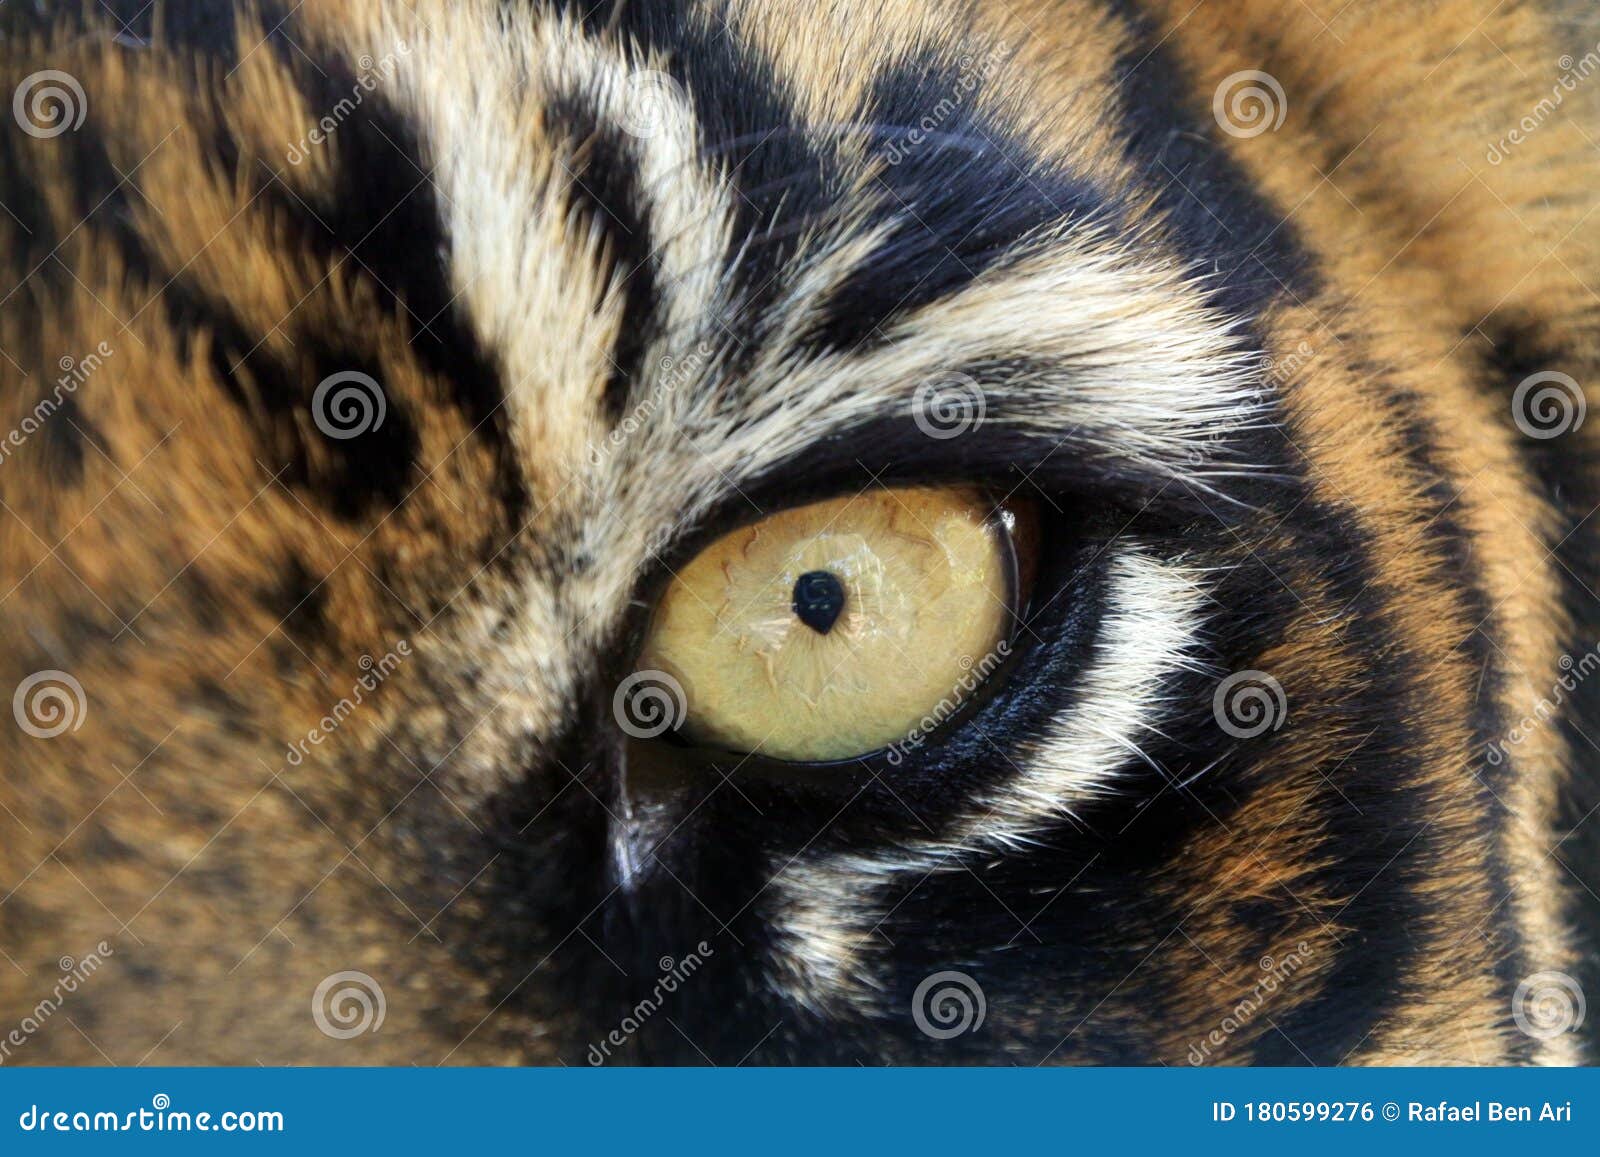 bengal tigers animal eye looking at camera